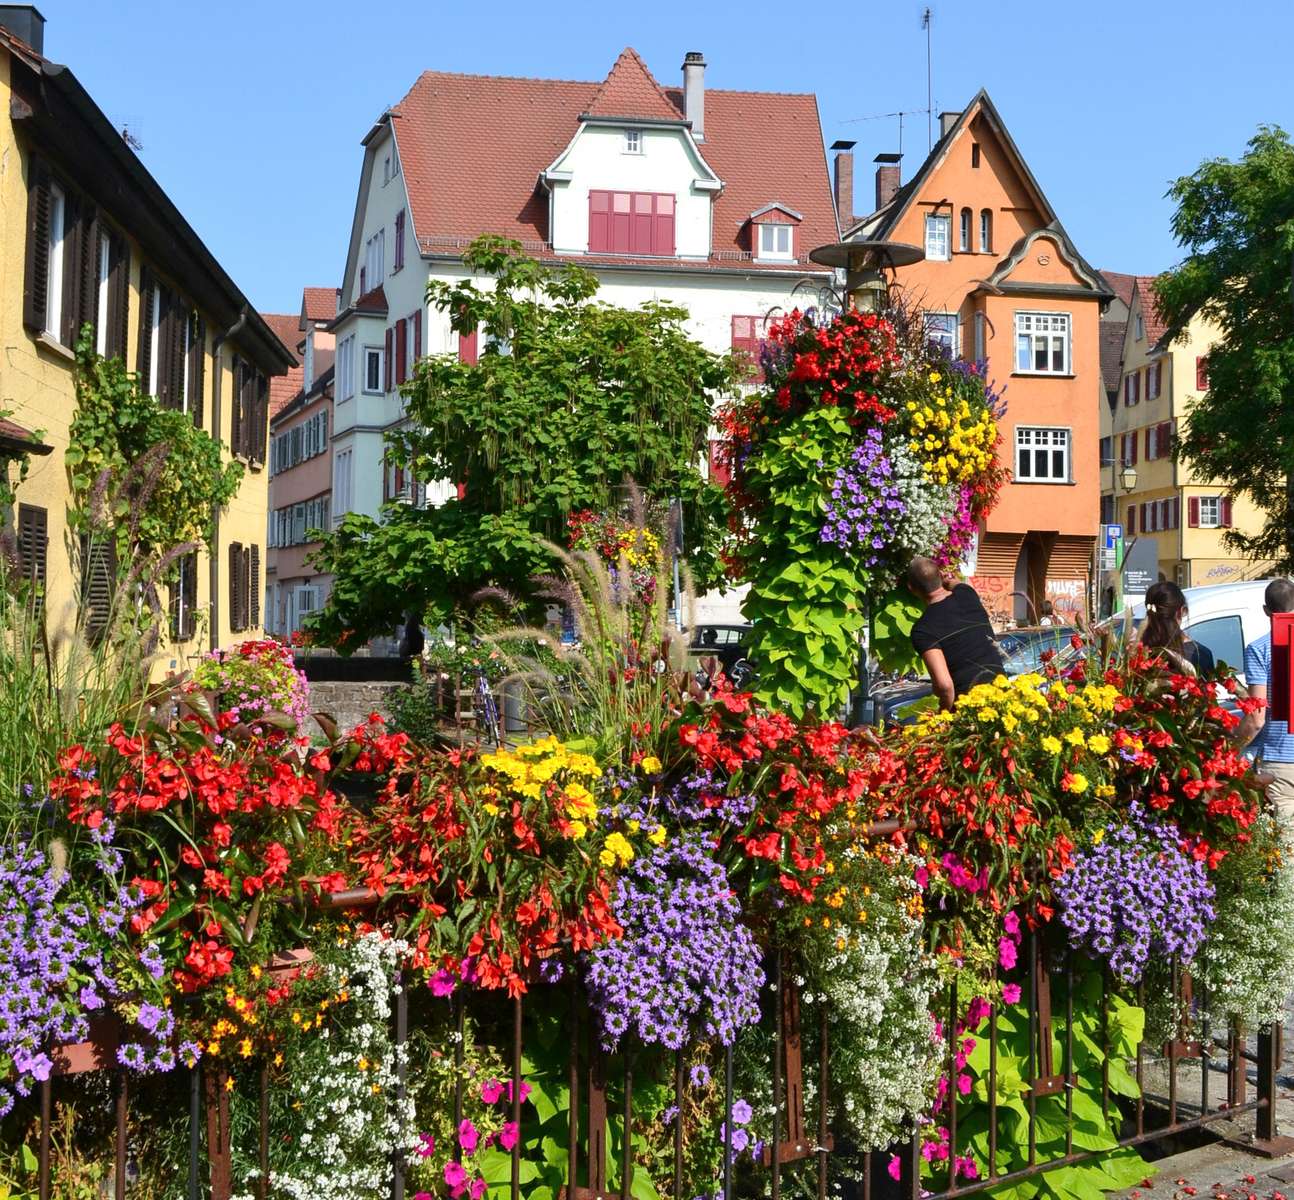 Balaustra riccamente fiorita del ponte di Tubinga puzzle online